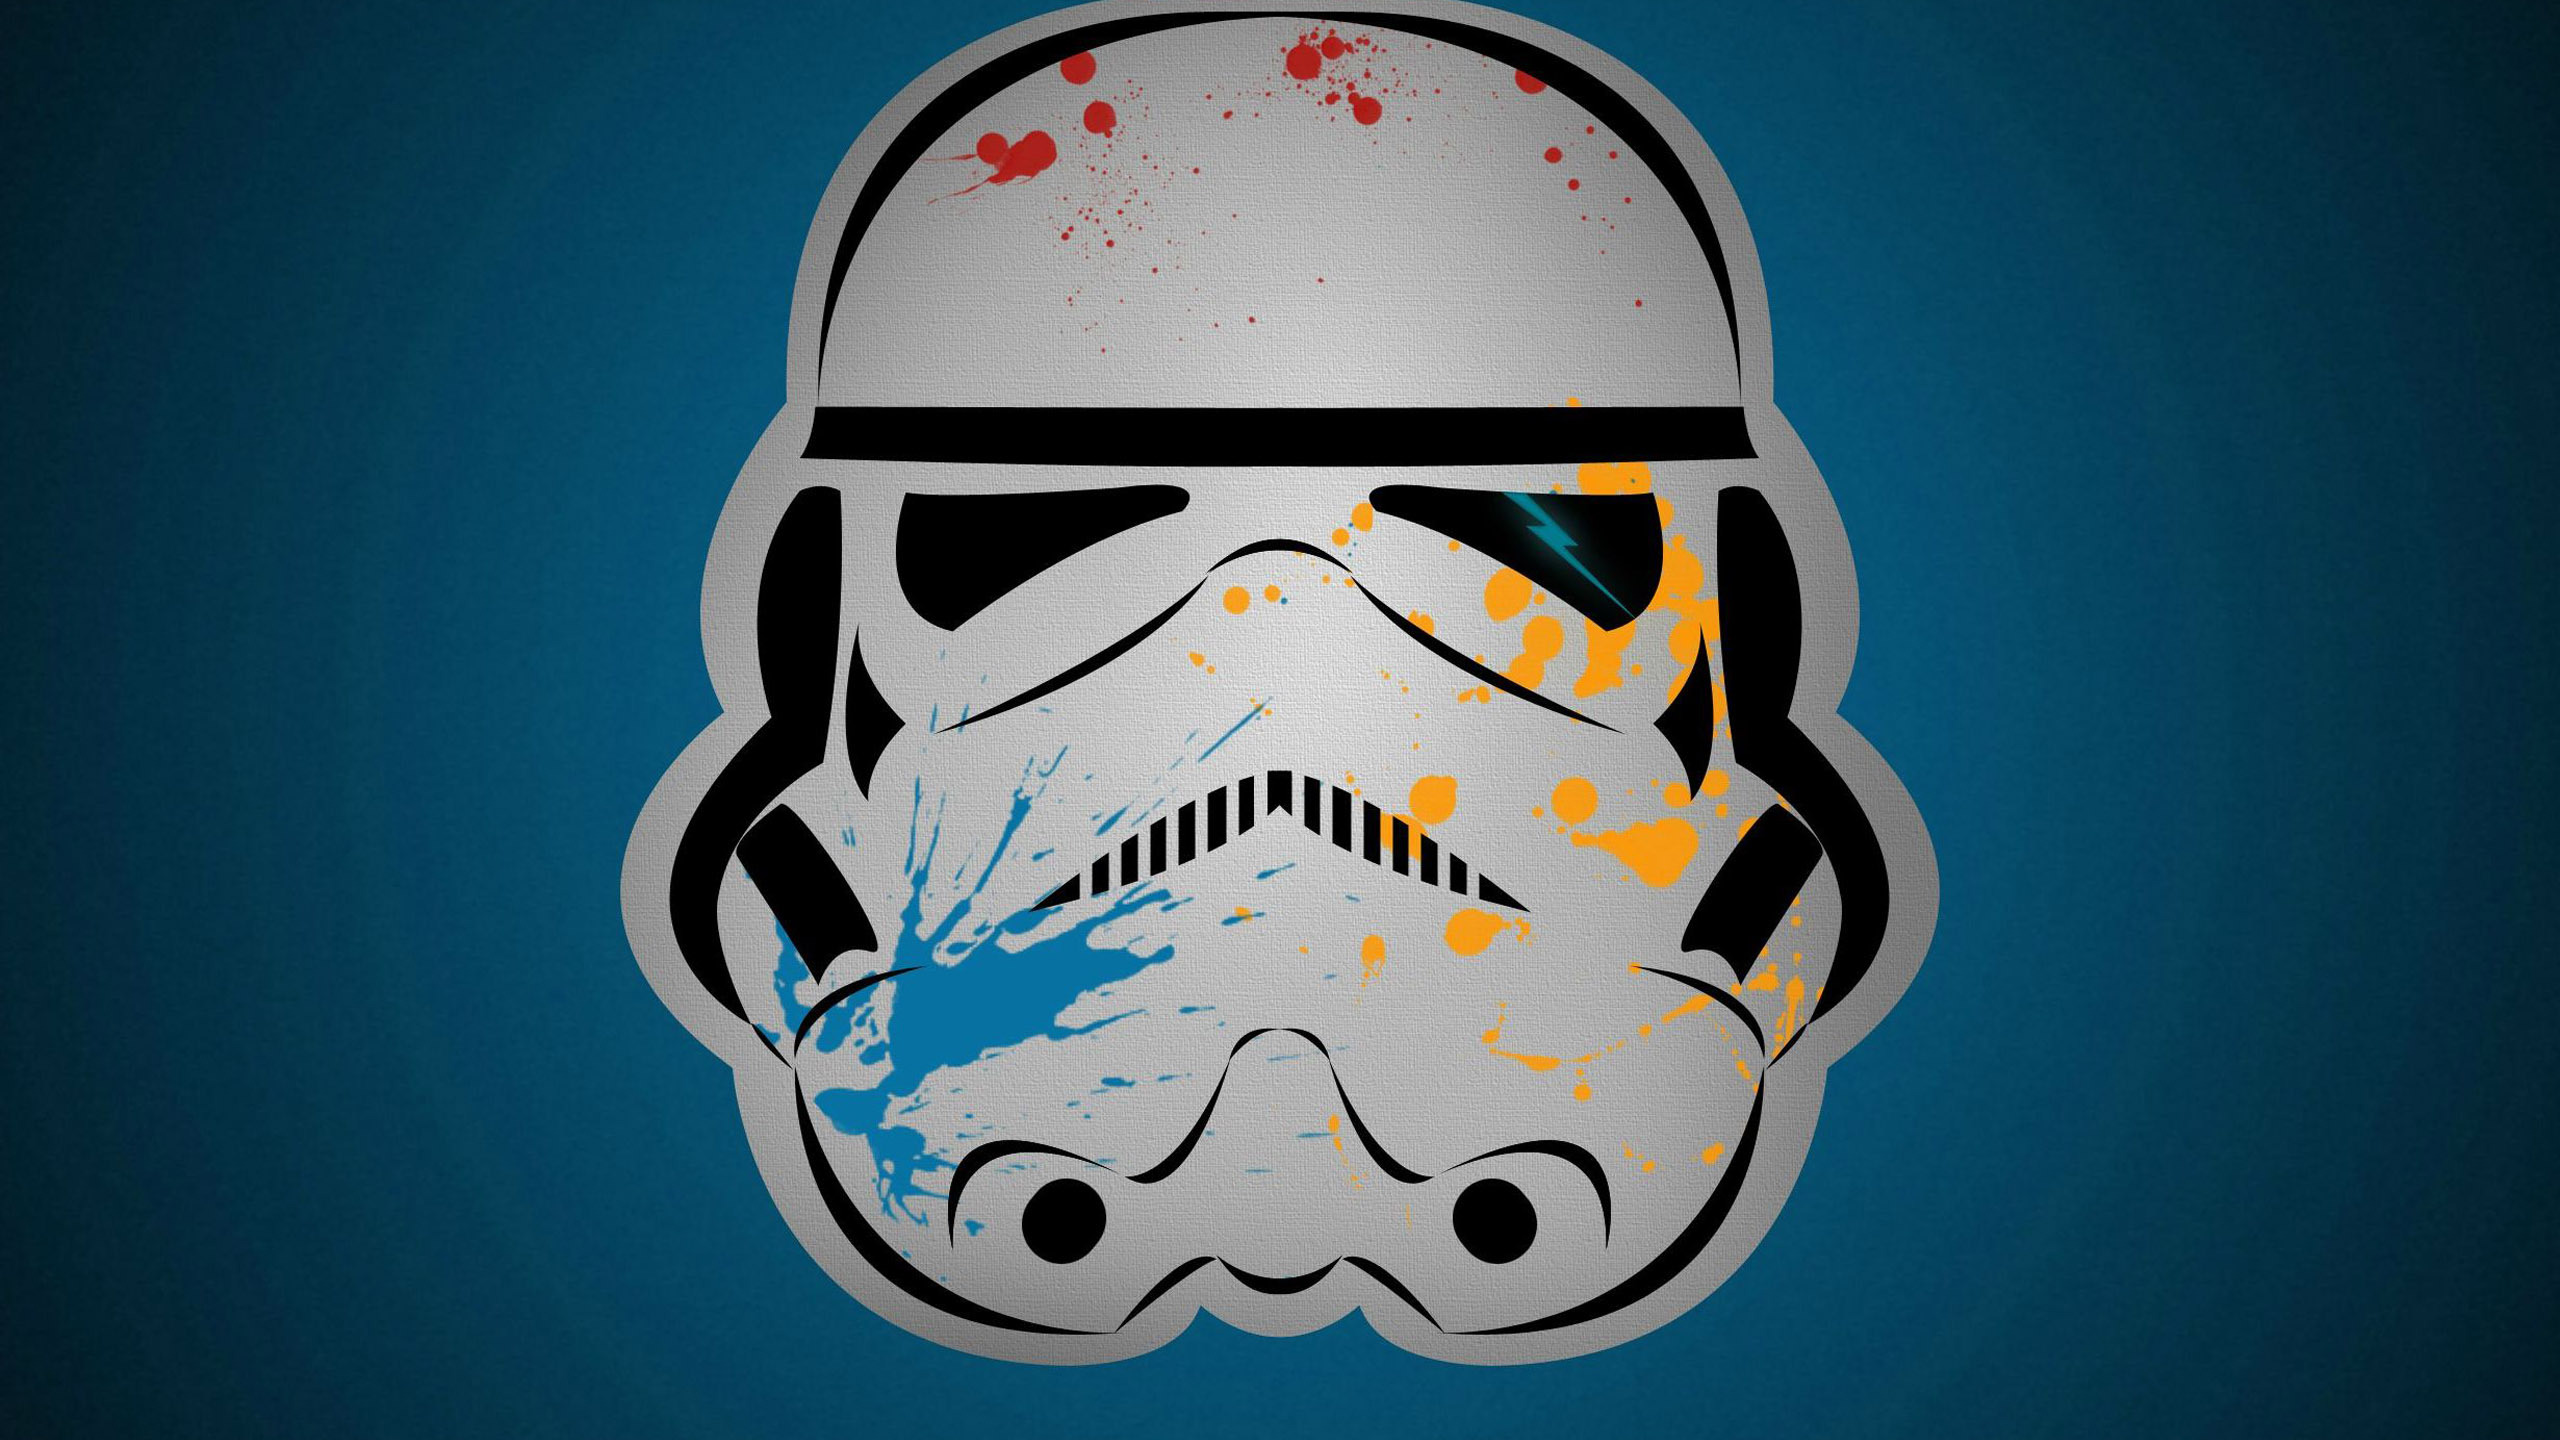 Stormtrooper   Star Wars wallpaper by wallconvertcom